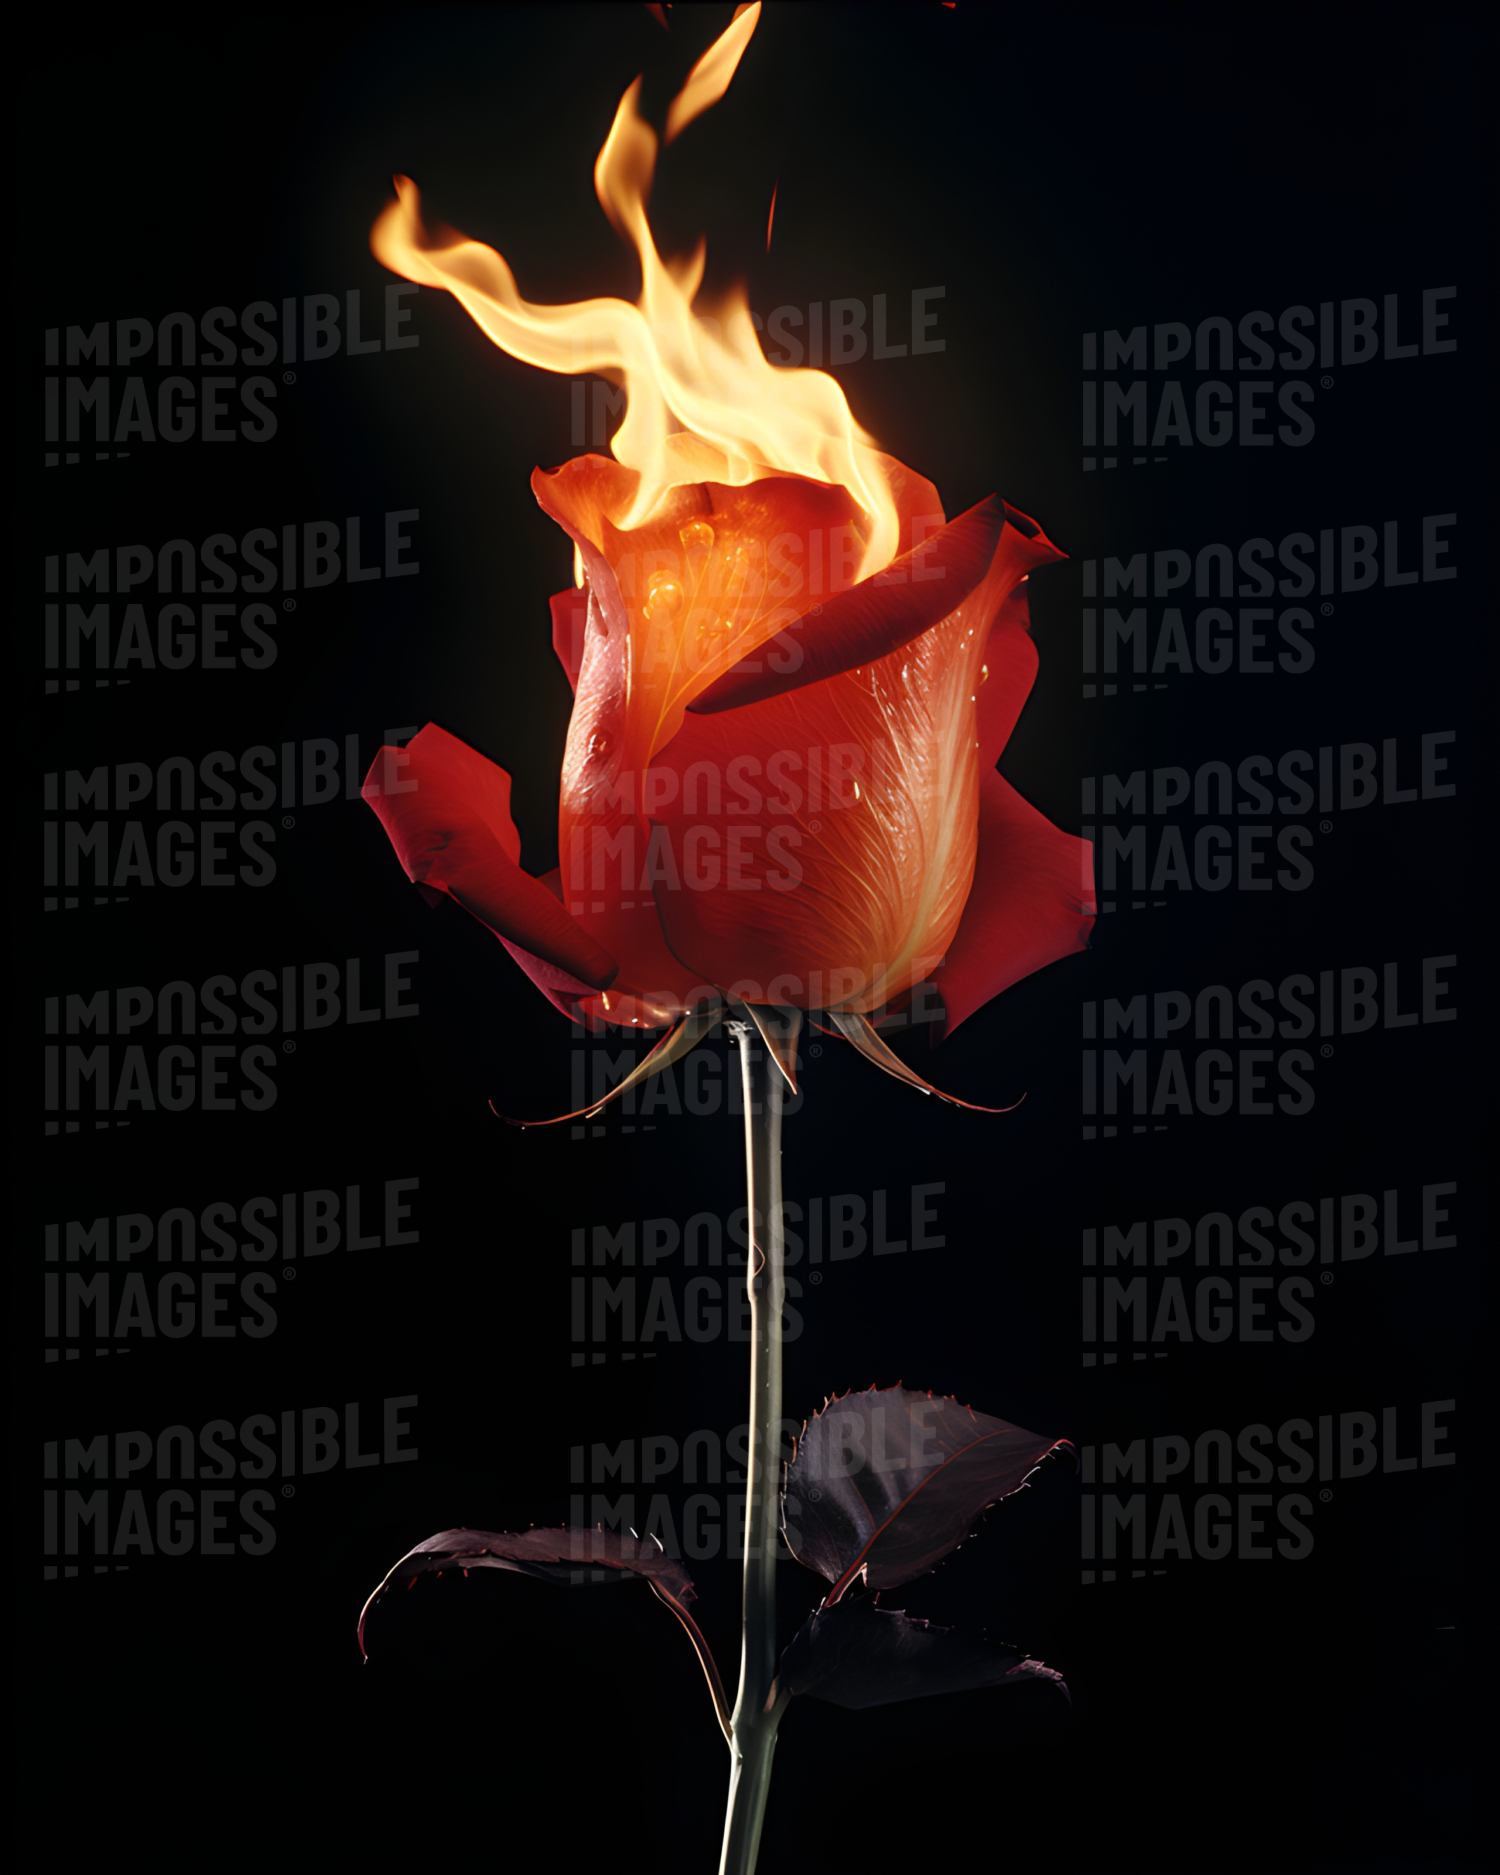 An orange rose on fire - 